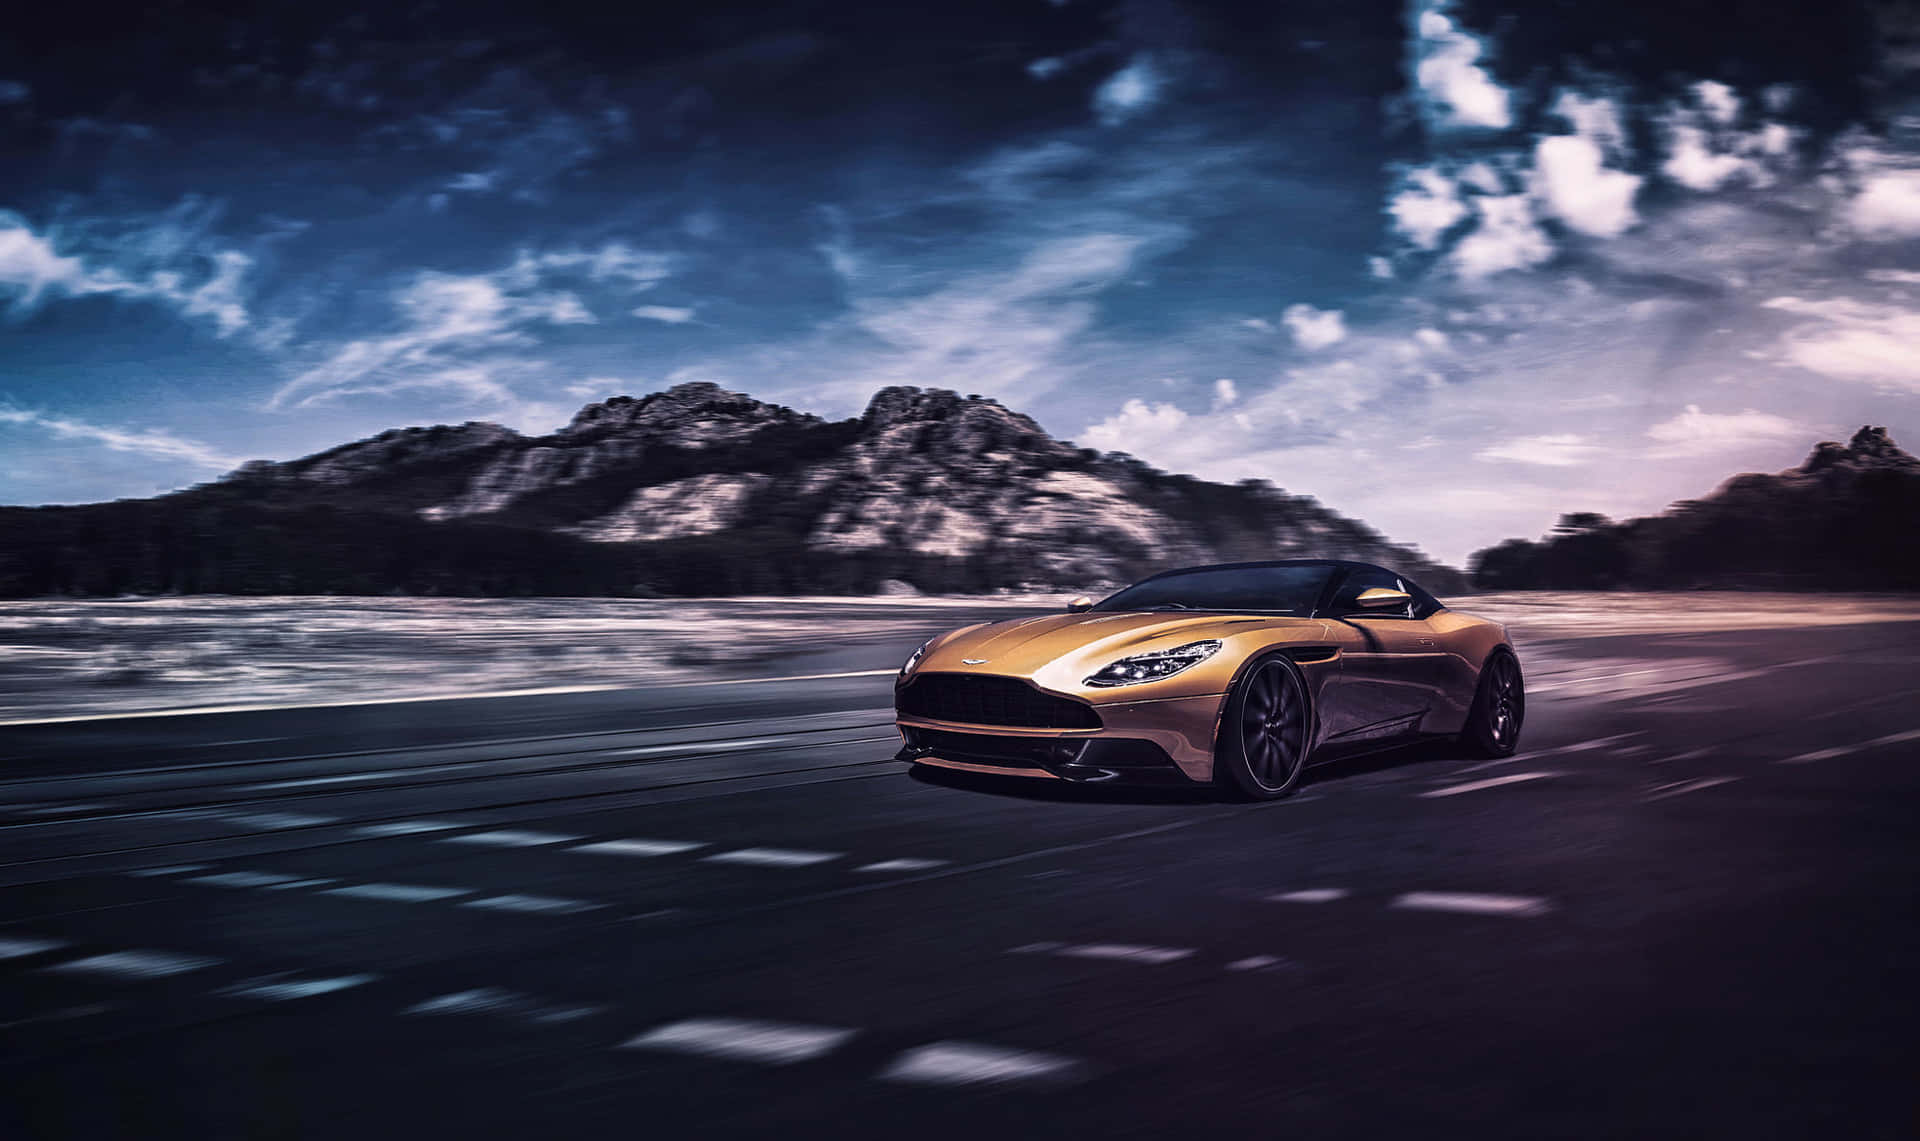 Stunning Aston Martin DB11 in Motion Wallpaper